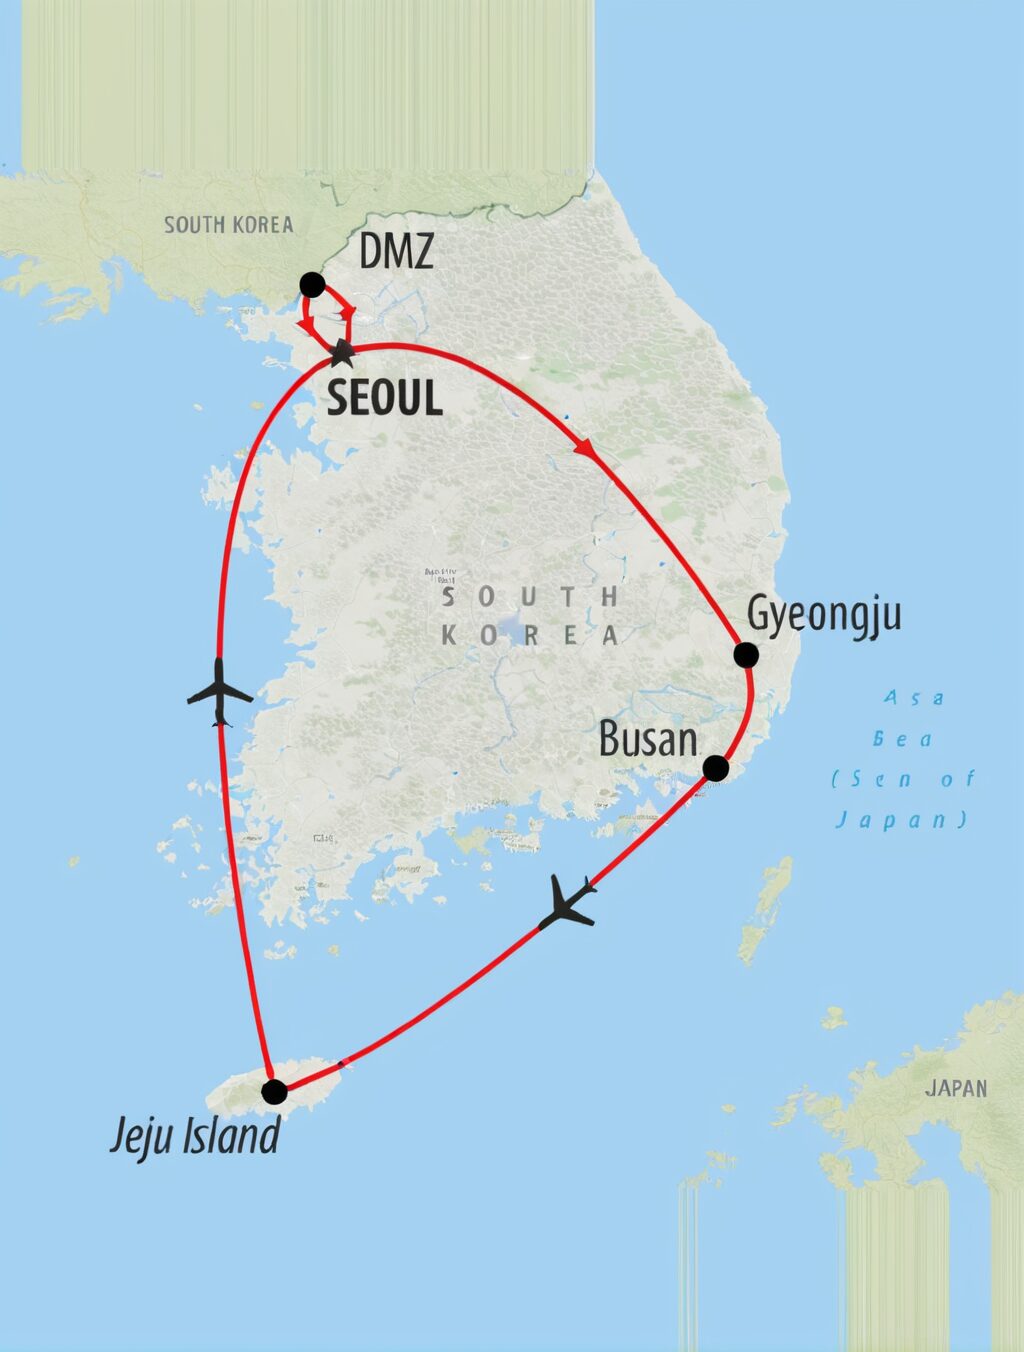 south korea and japan itinerary